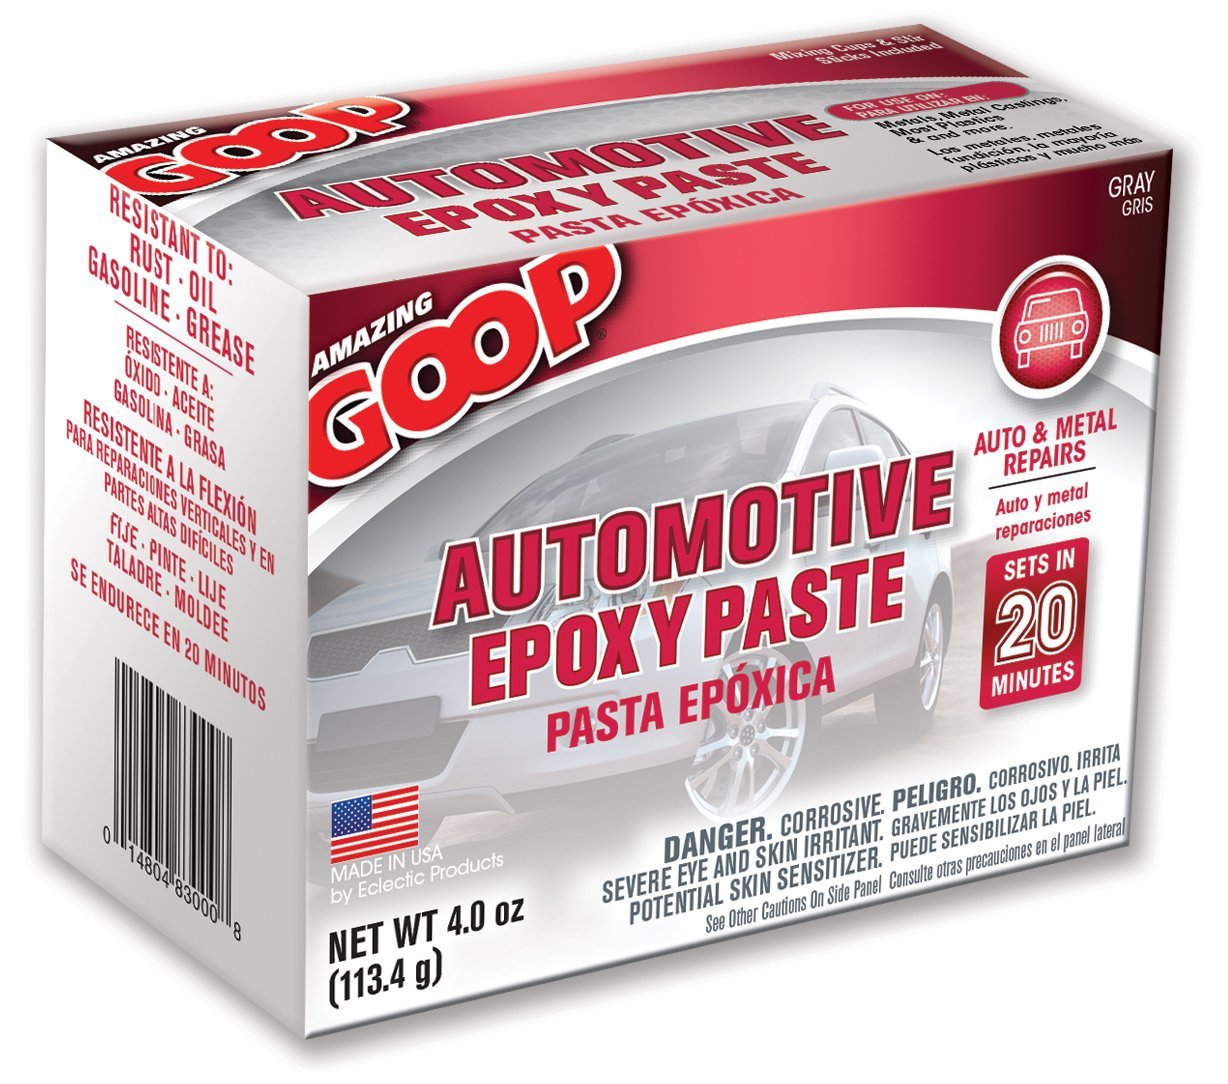 Automotive Epoxy Paste